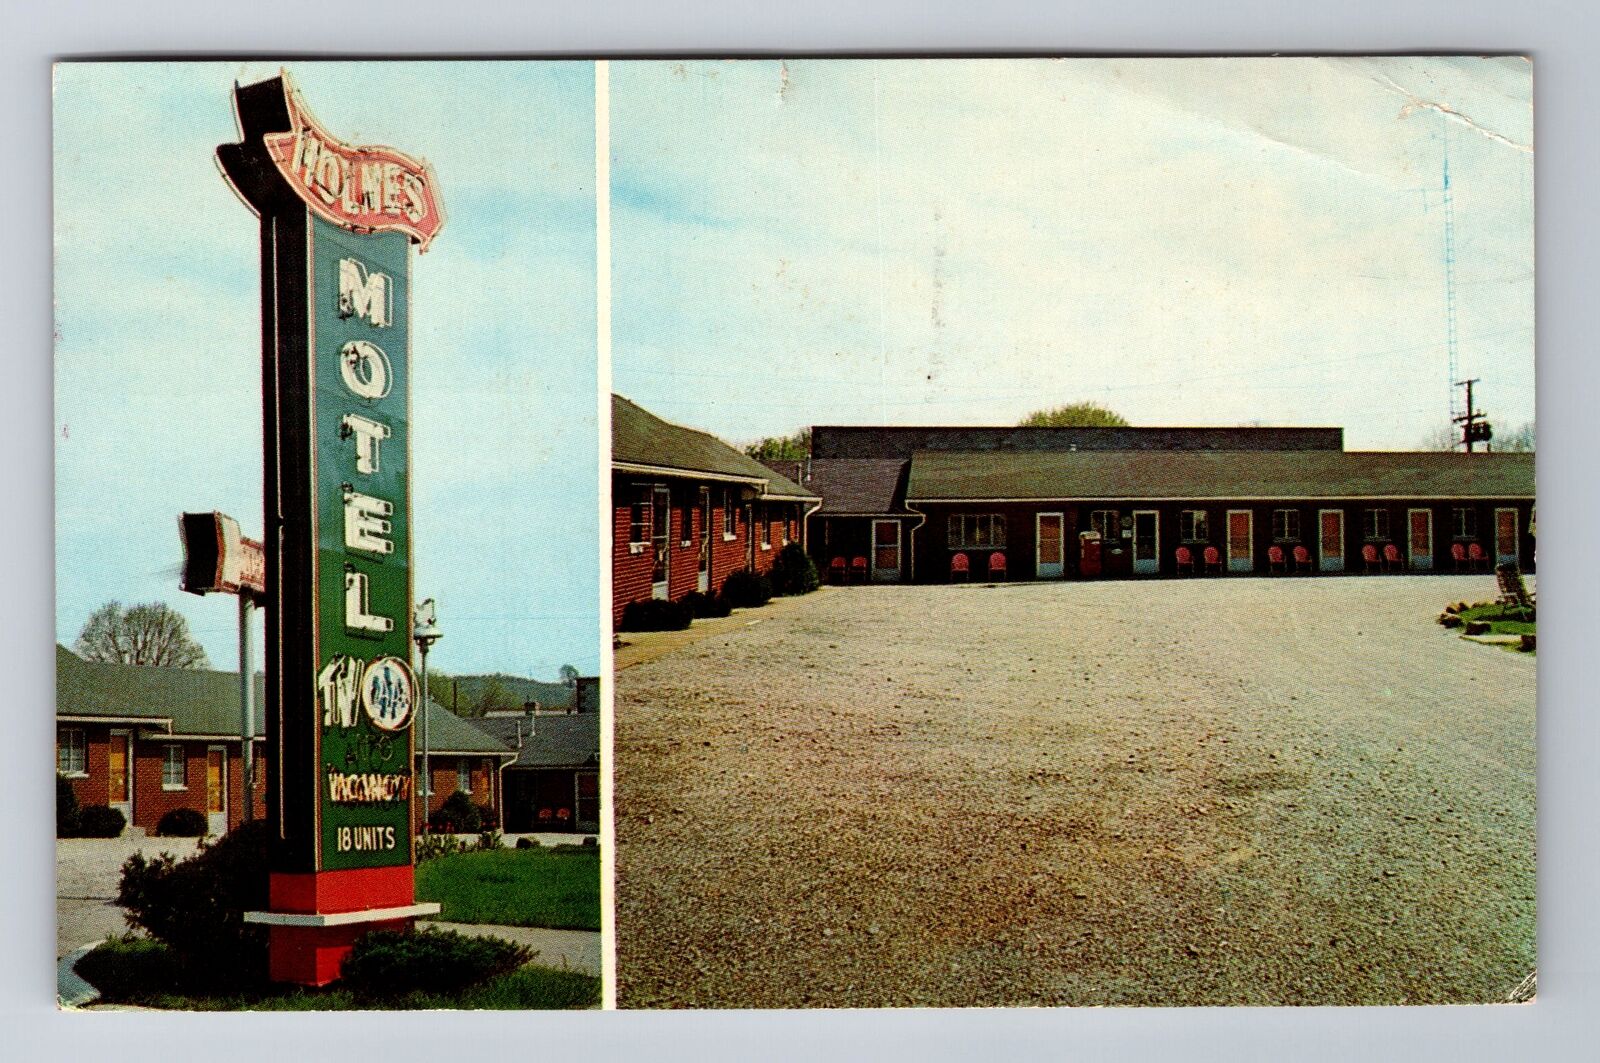 New Concord OH-Ohio, Holmes Motel, Advertising, c1962 Vintage Souvenir Postcard